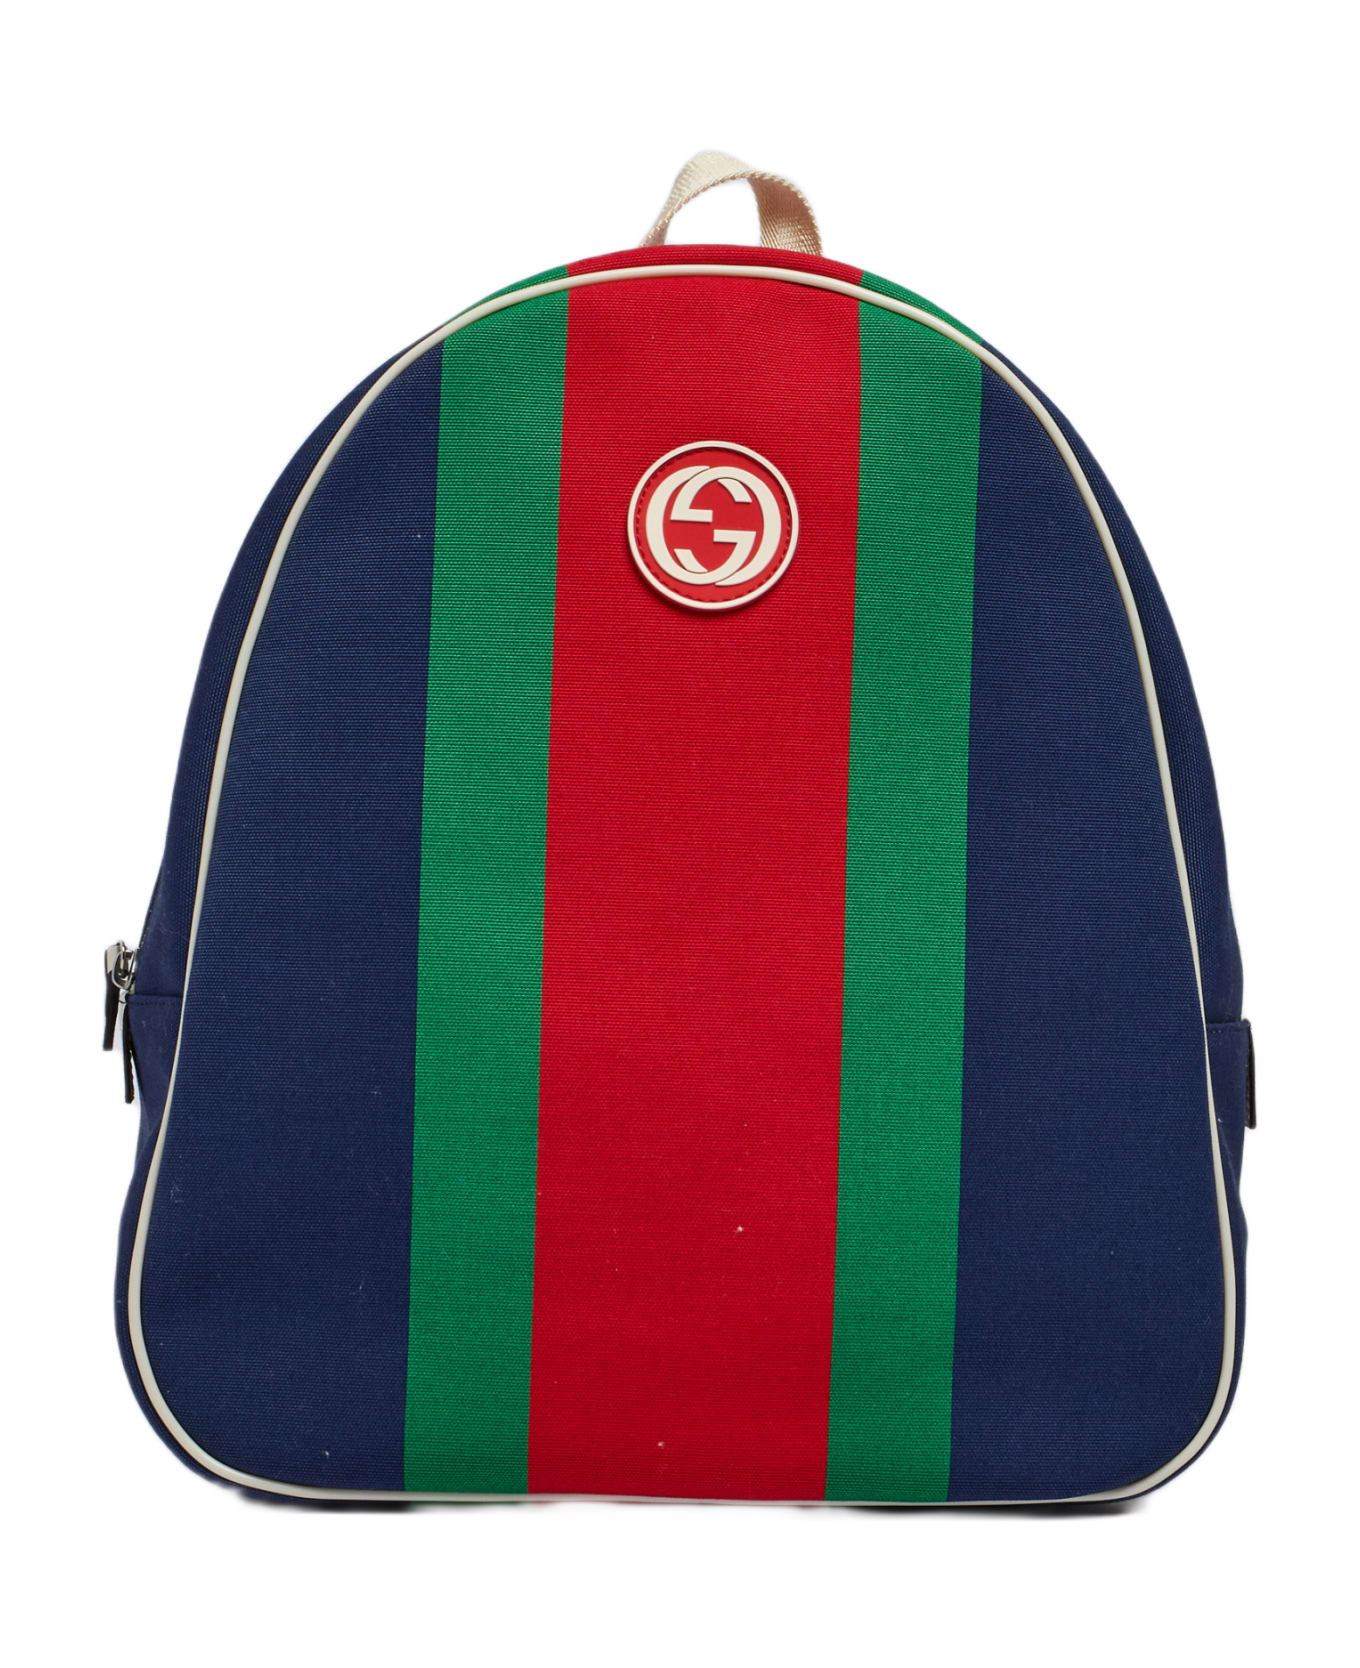 Gucci Backpack Backpack - BLU-VERDE-ROSSO